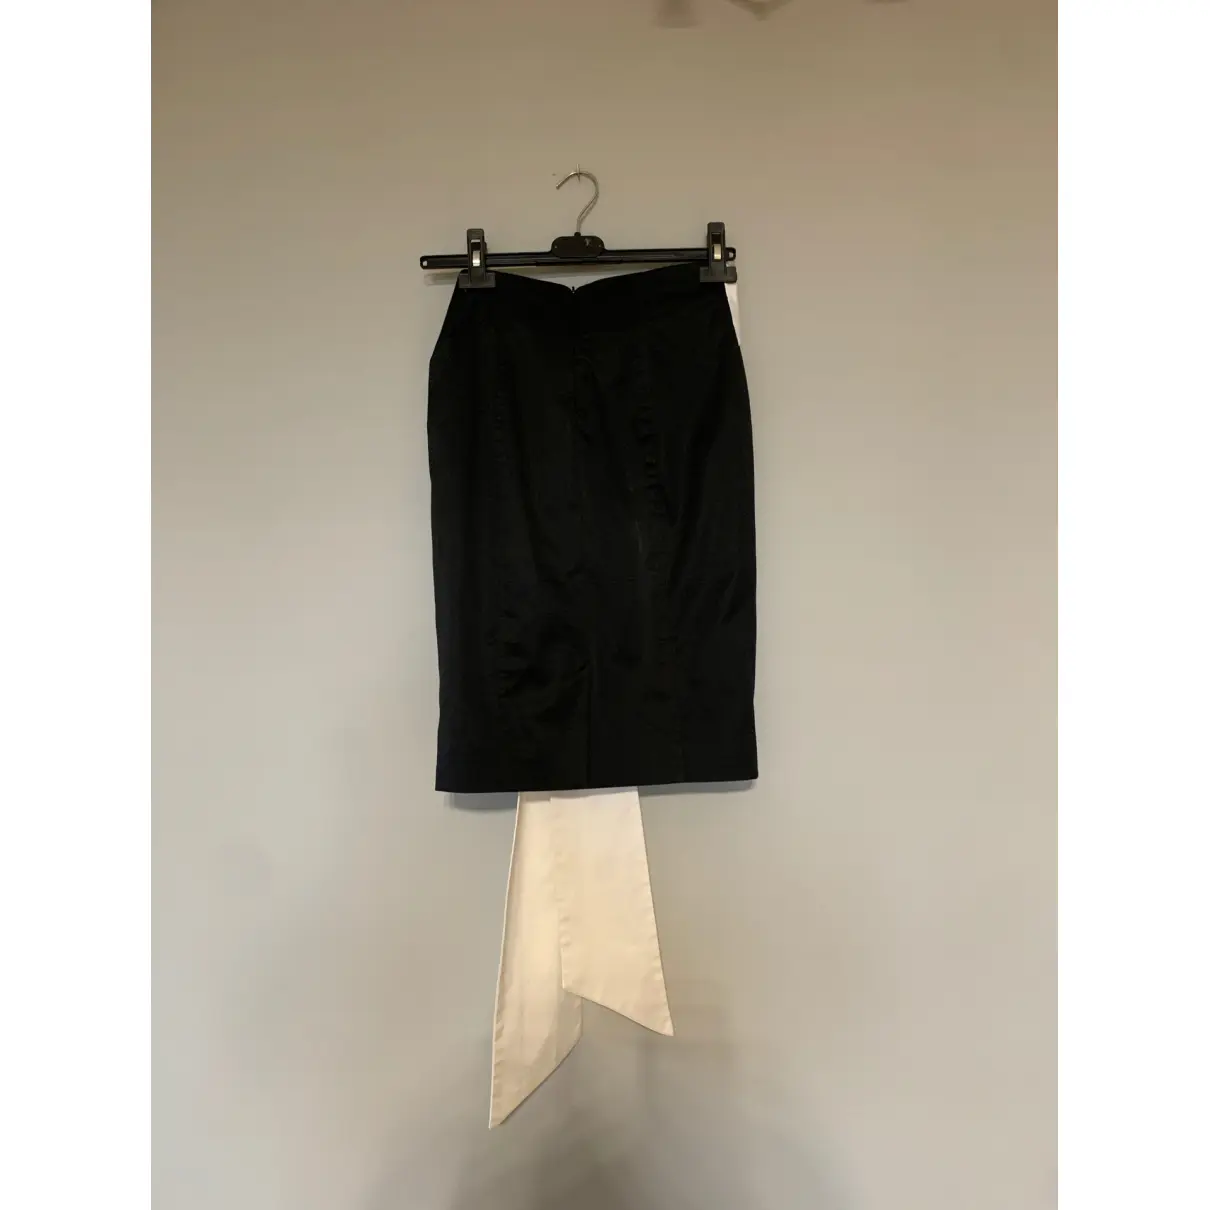 Buy Flavio Castellani Mid-length skirt online